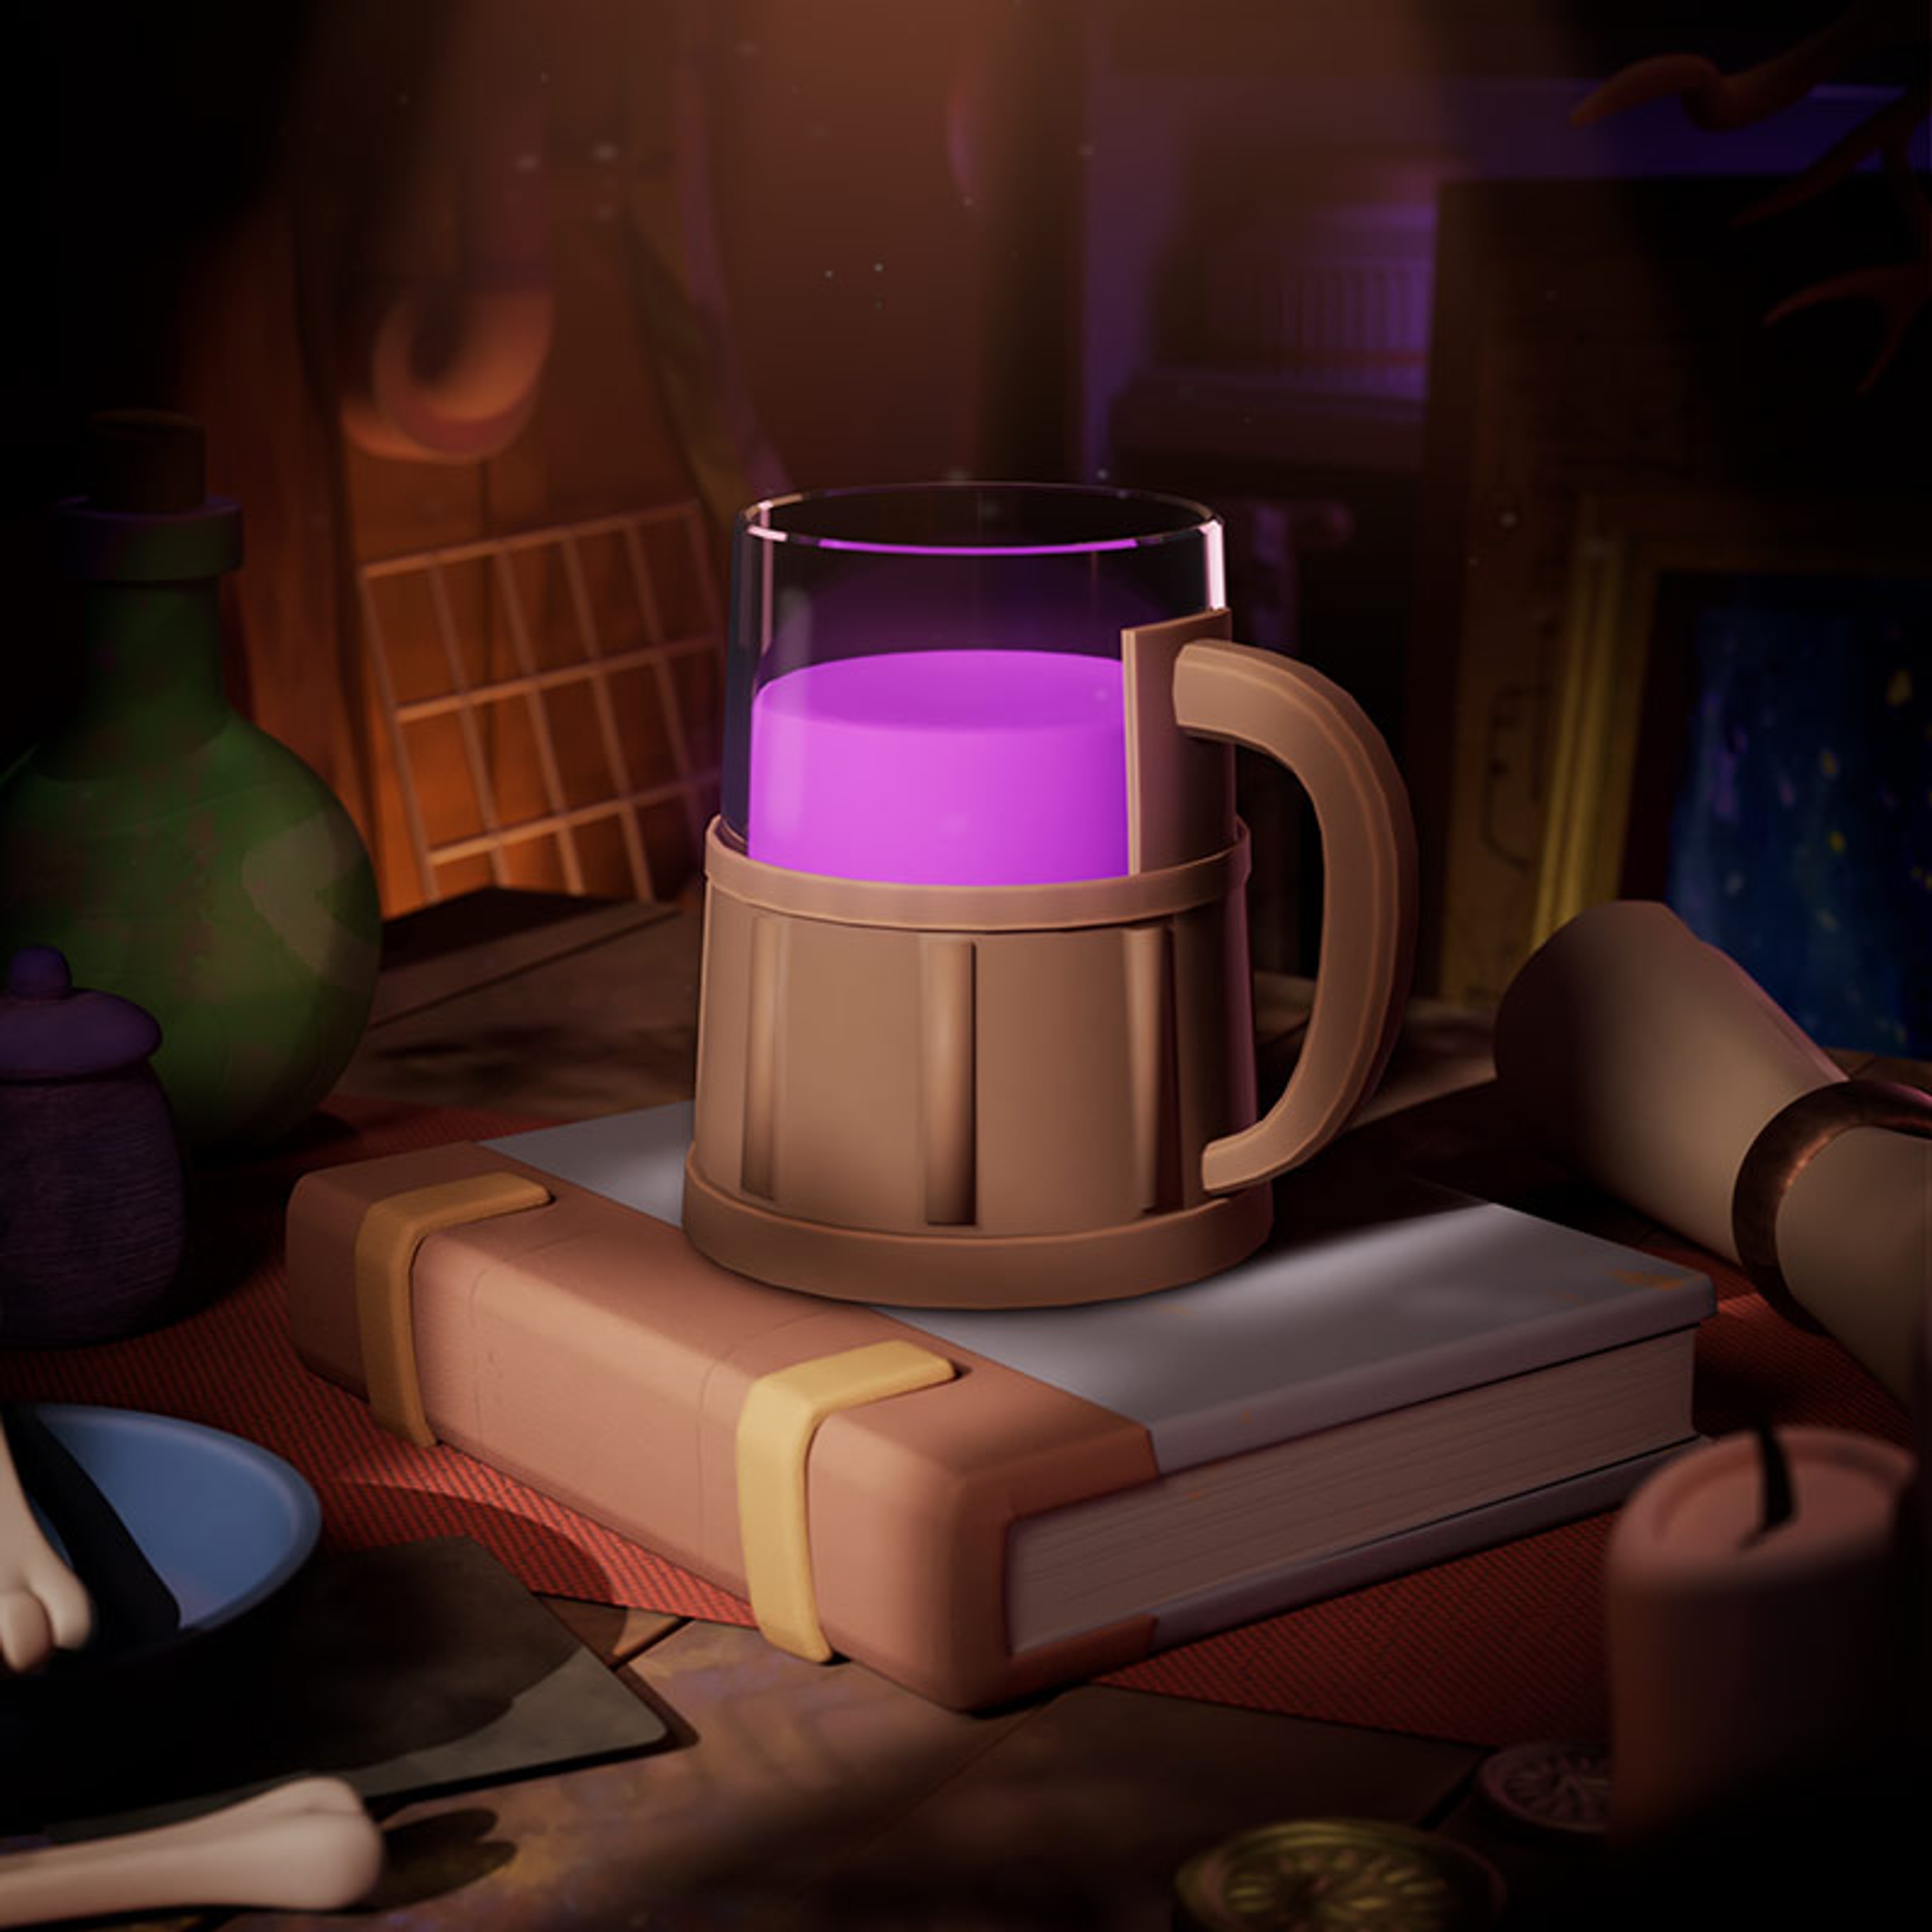 A mug of mysterious purple liquid